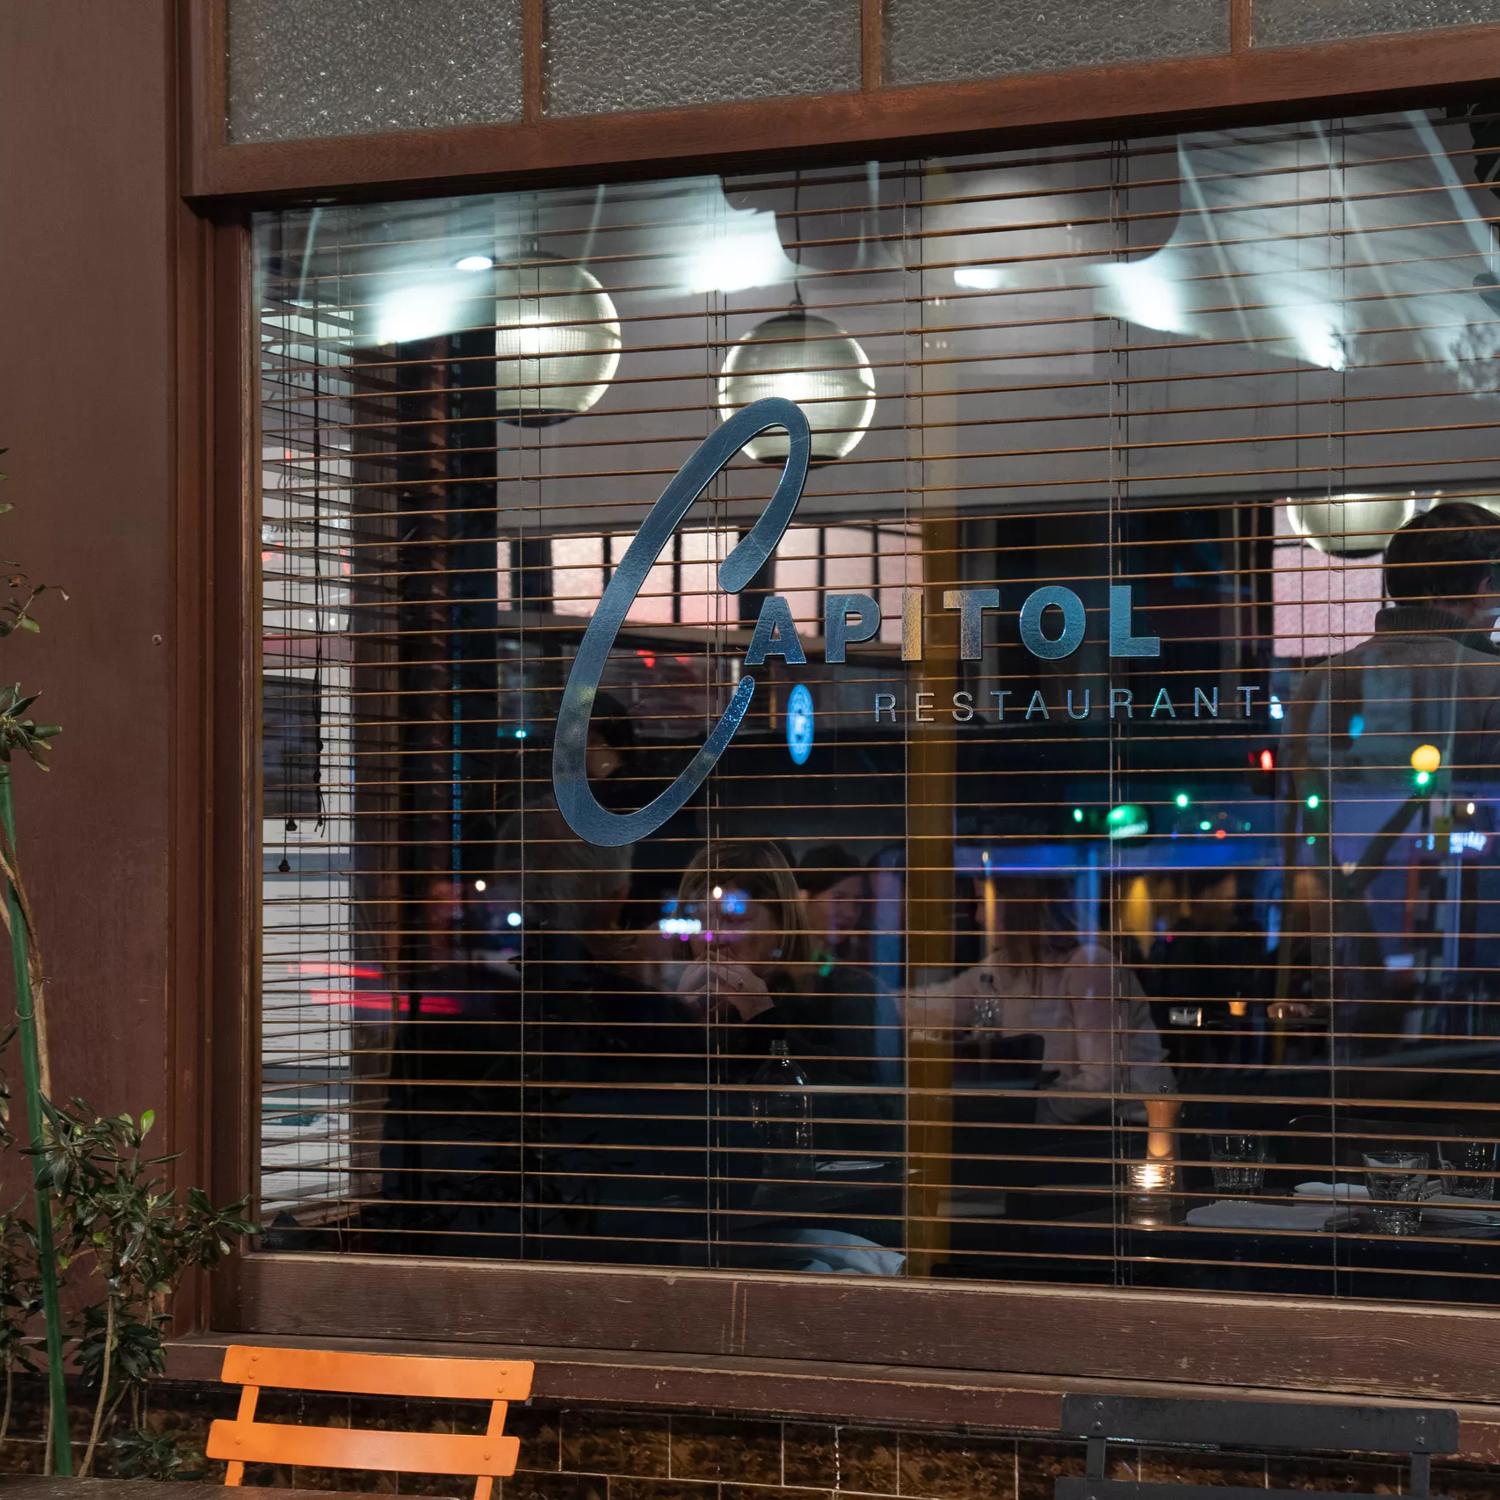 Exterior image looking through window into Capitol restaurant.